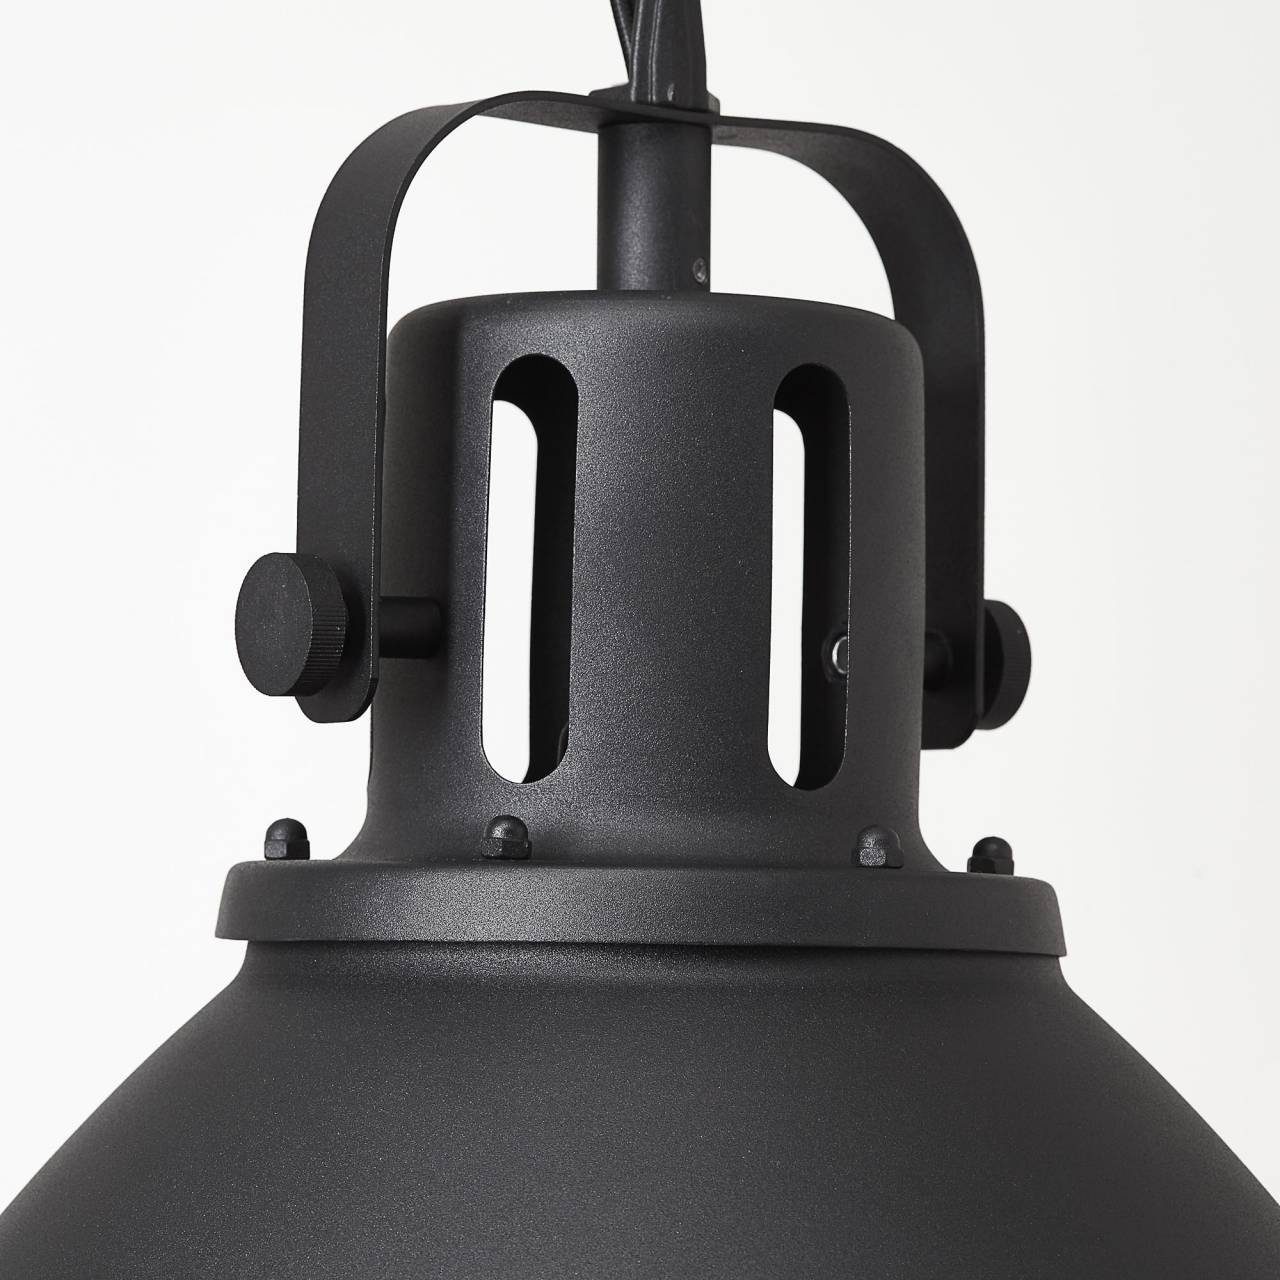 E27, Brilliant 47cm Pendelleuchte Jesper Lampe schwarz Pendelleuchte geeig Jesper, Glas A60, 60W, 1x